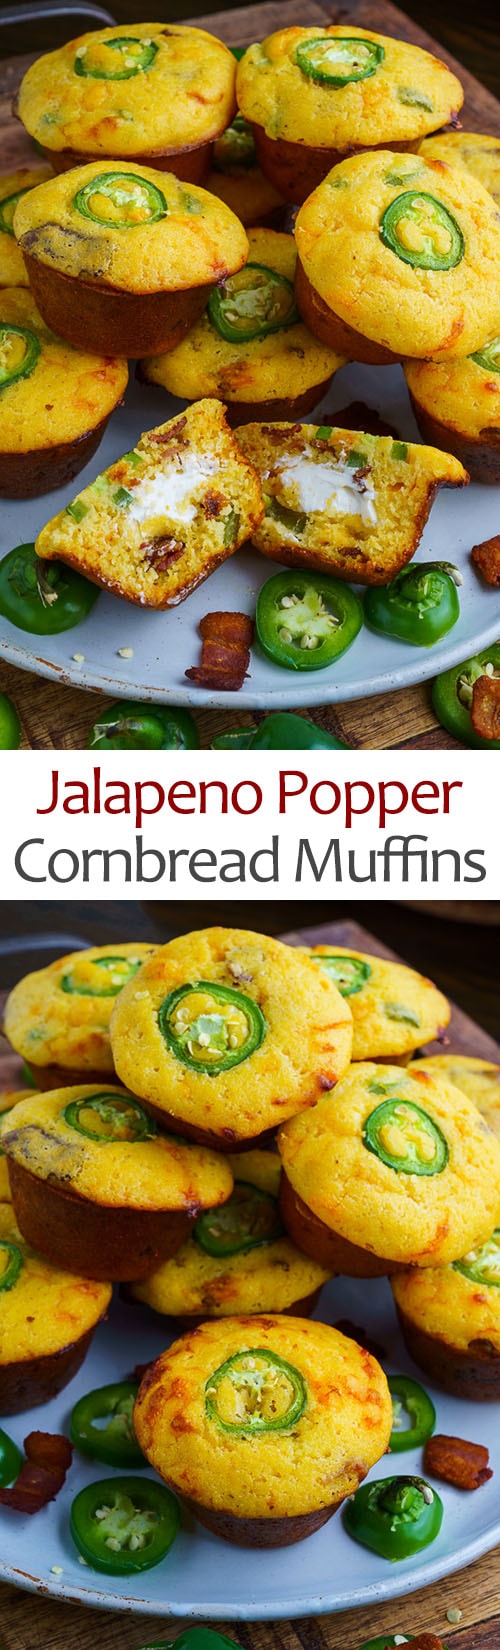 Jalapeno Popper Cornbread Muffins